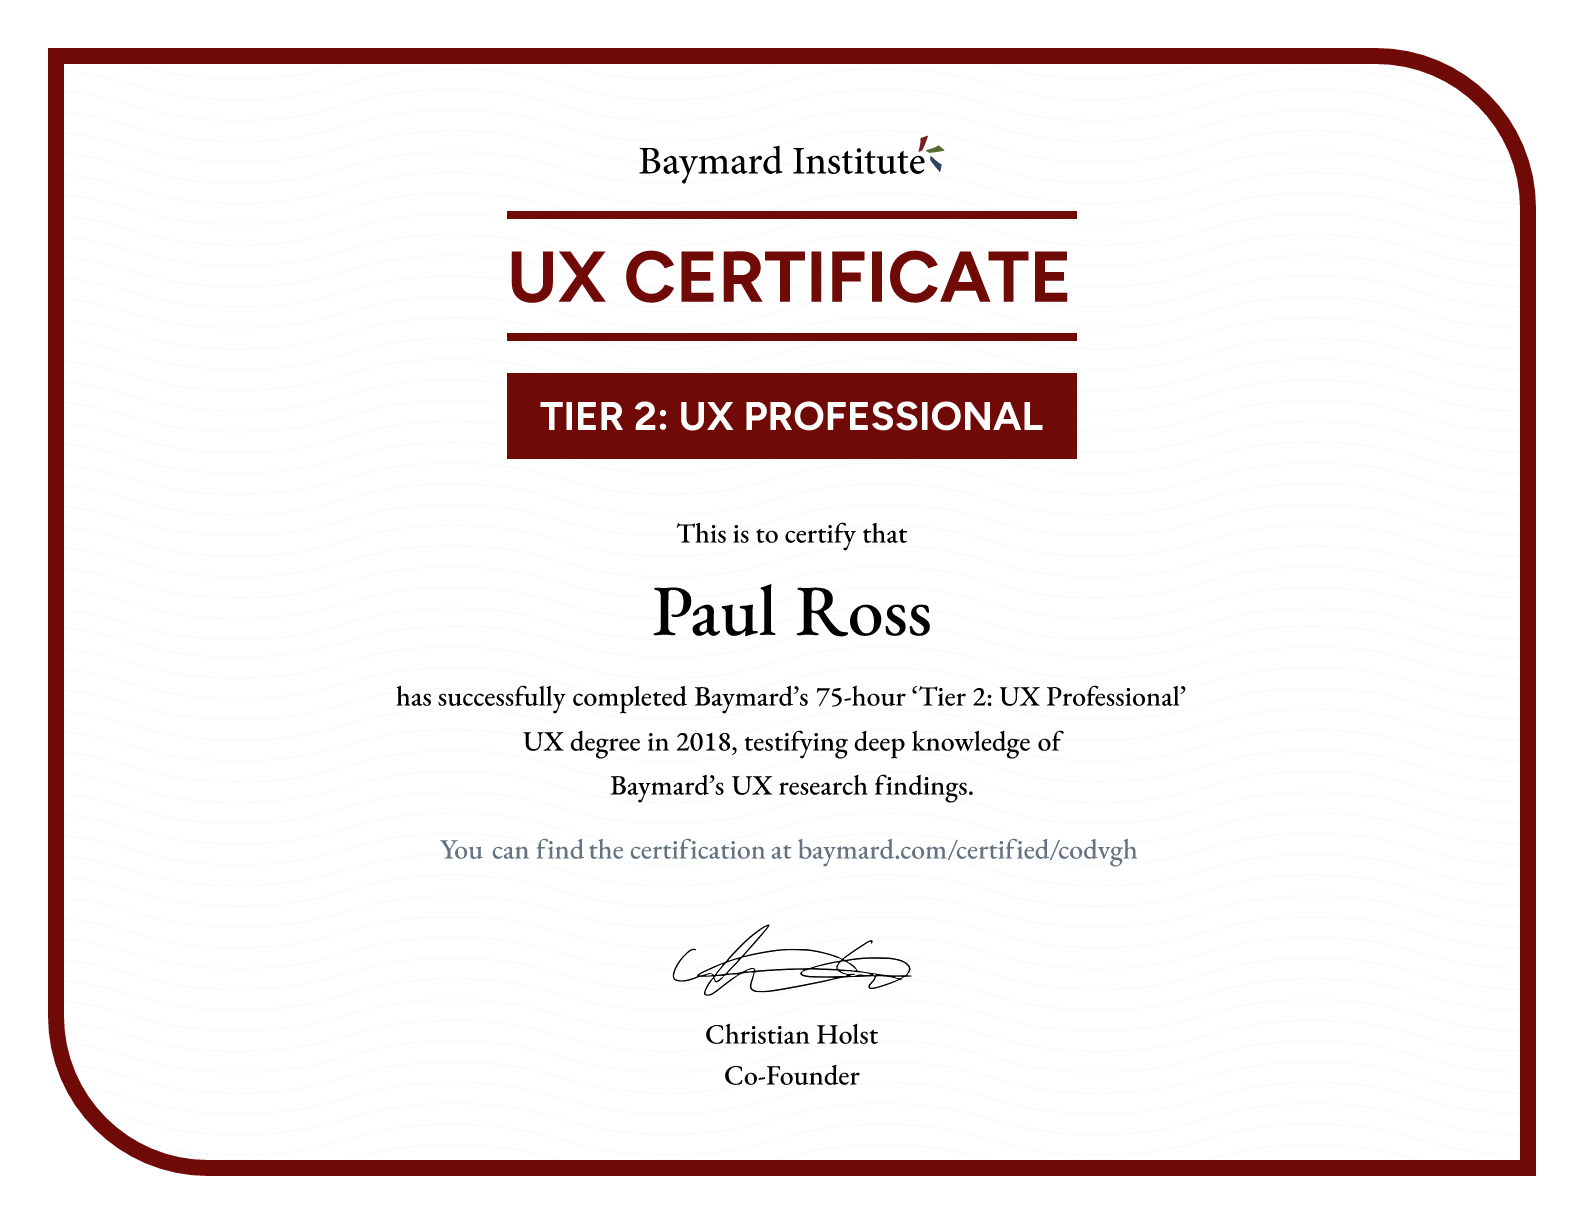 Paul Ross’s certificate